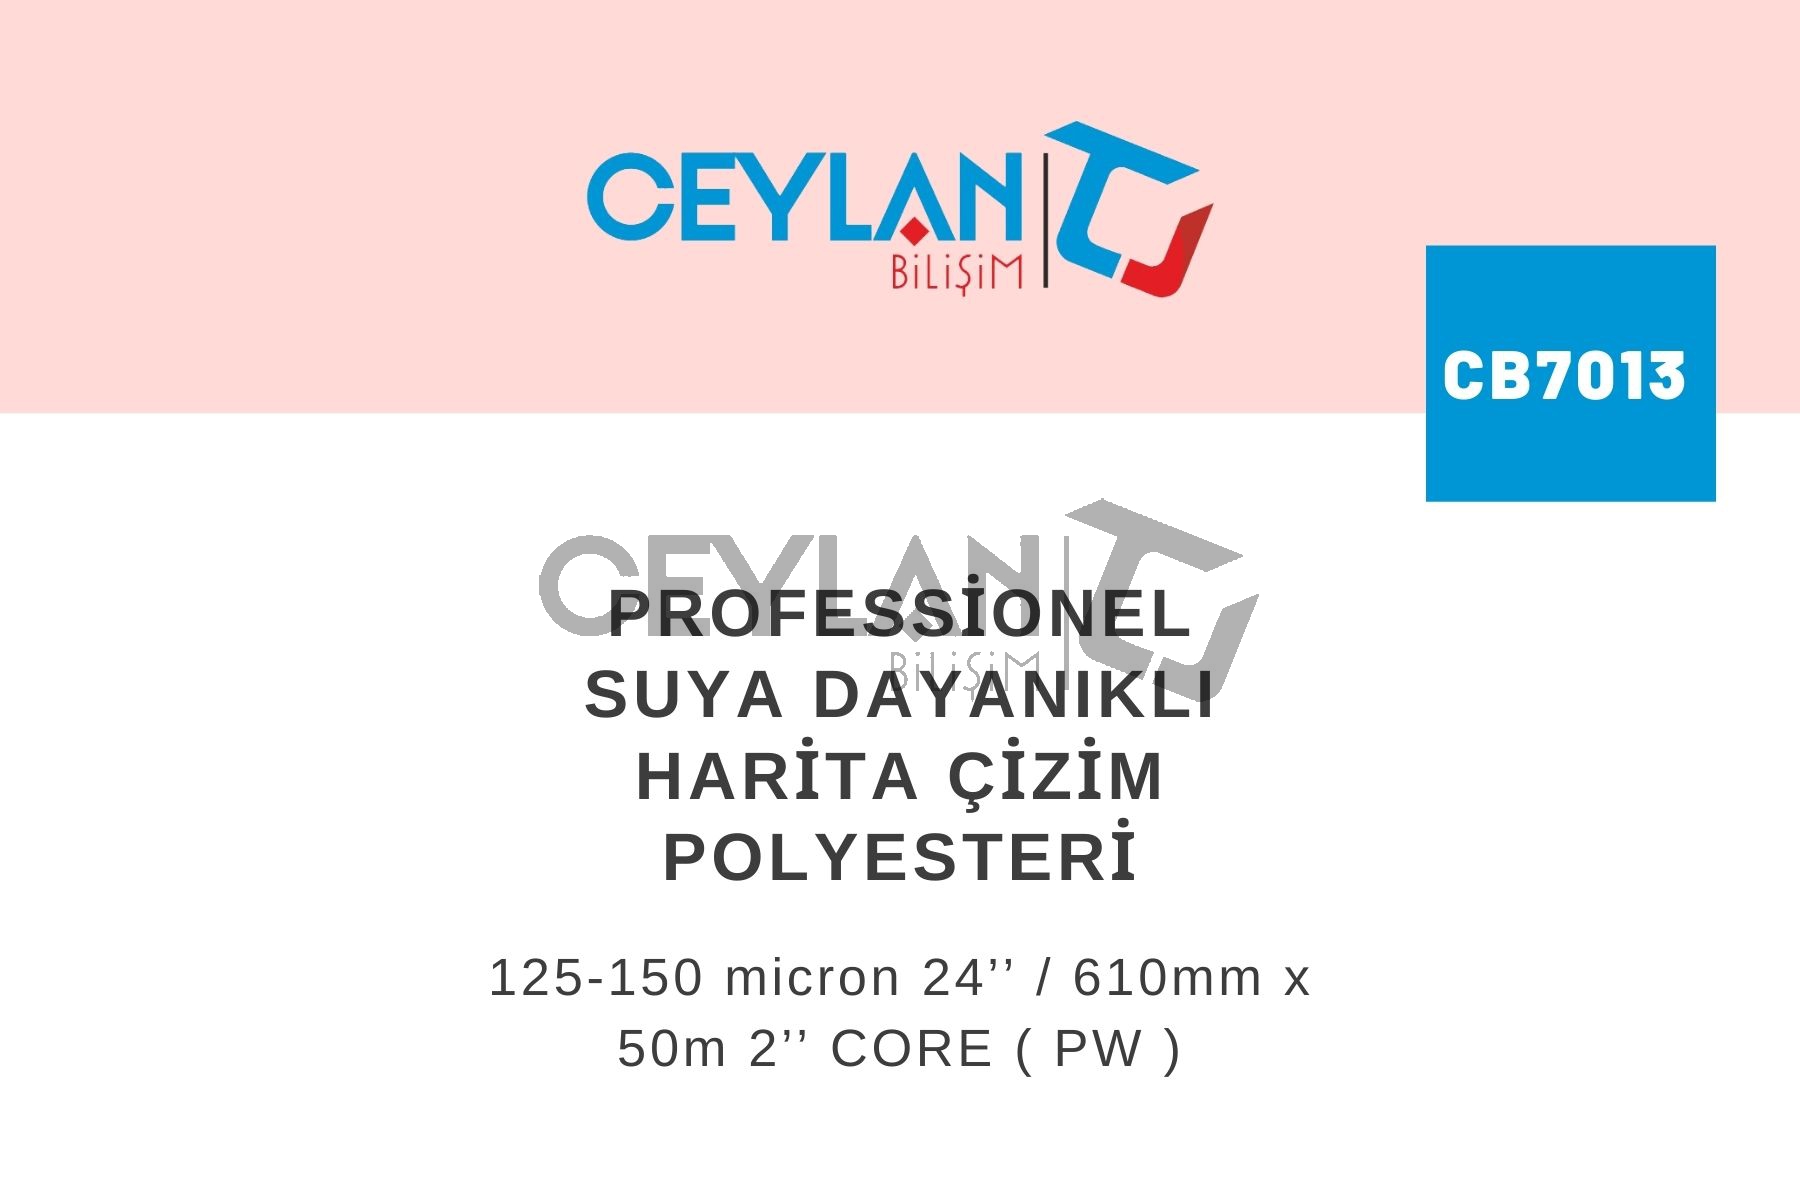 Professionel Suya Dayanıklı Harita Çizim Polyesteri 125-150 micron 24’’ / 610mm x 50m 2’’ CORE ( PW )